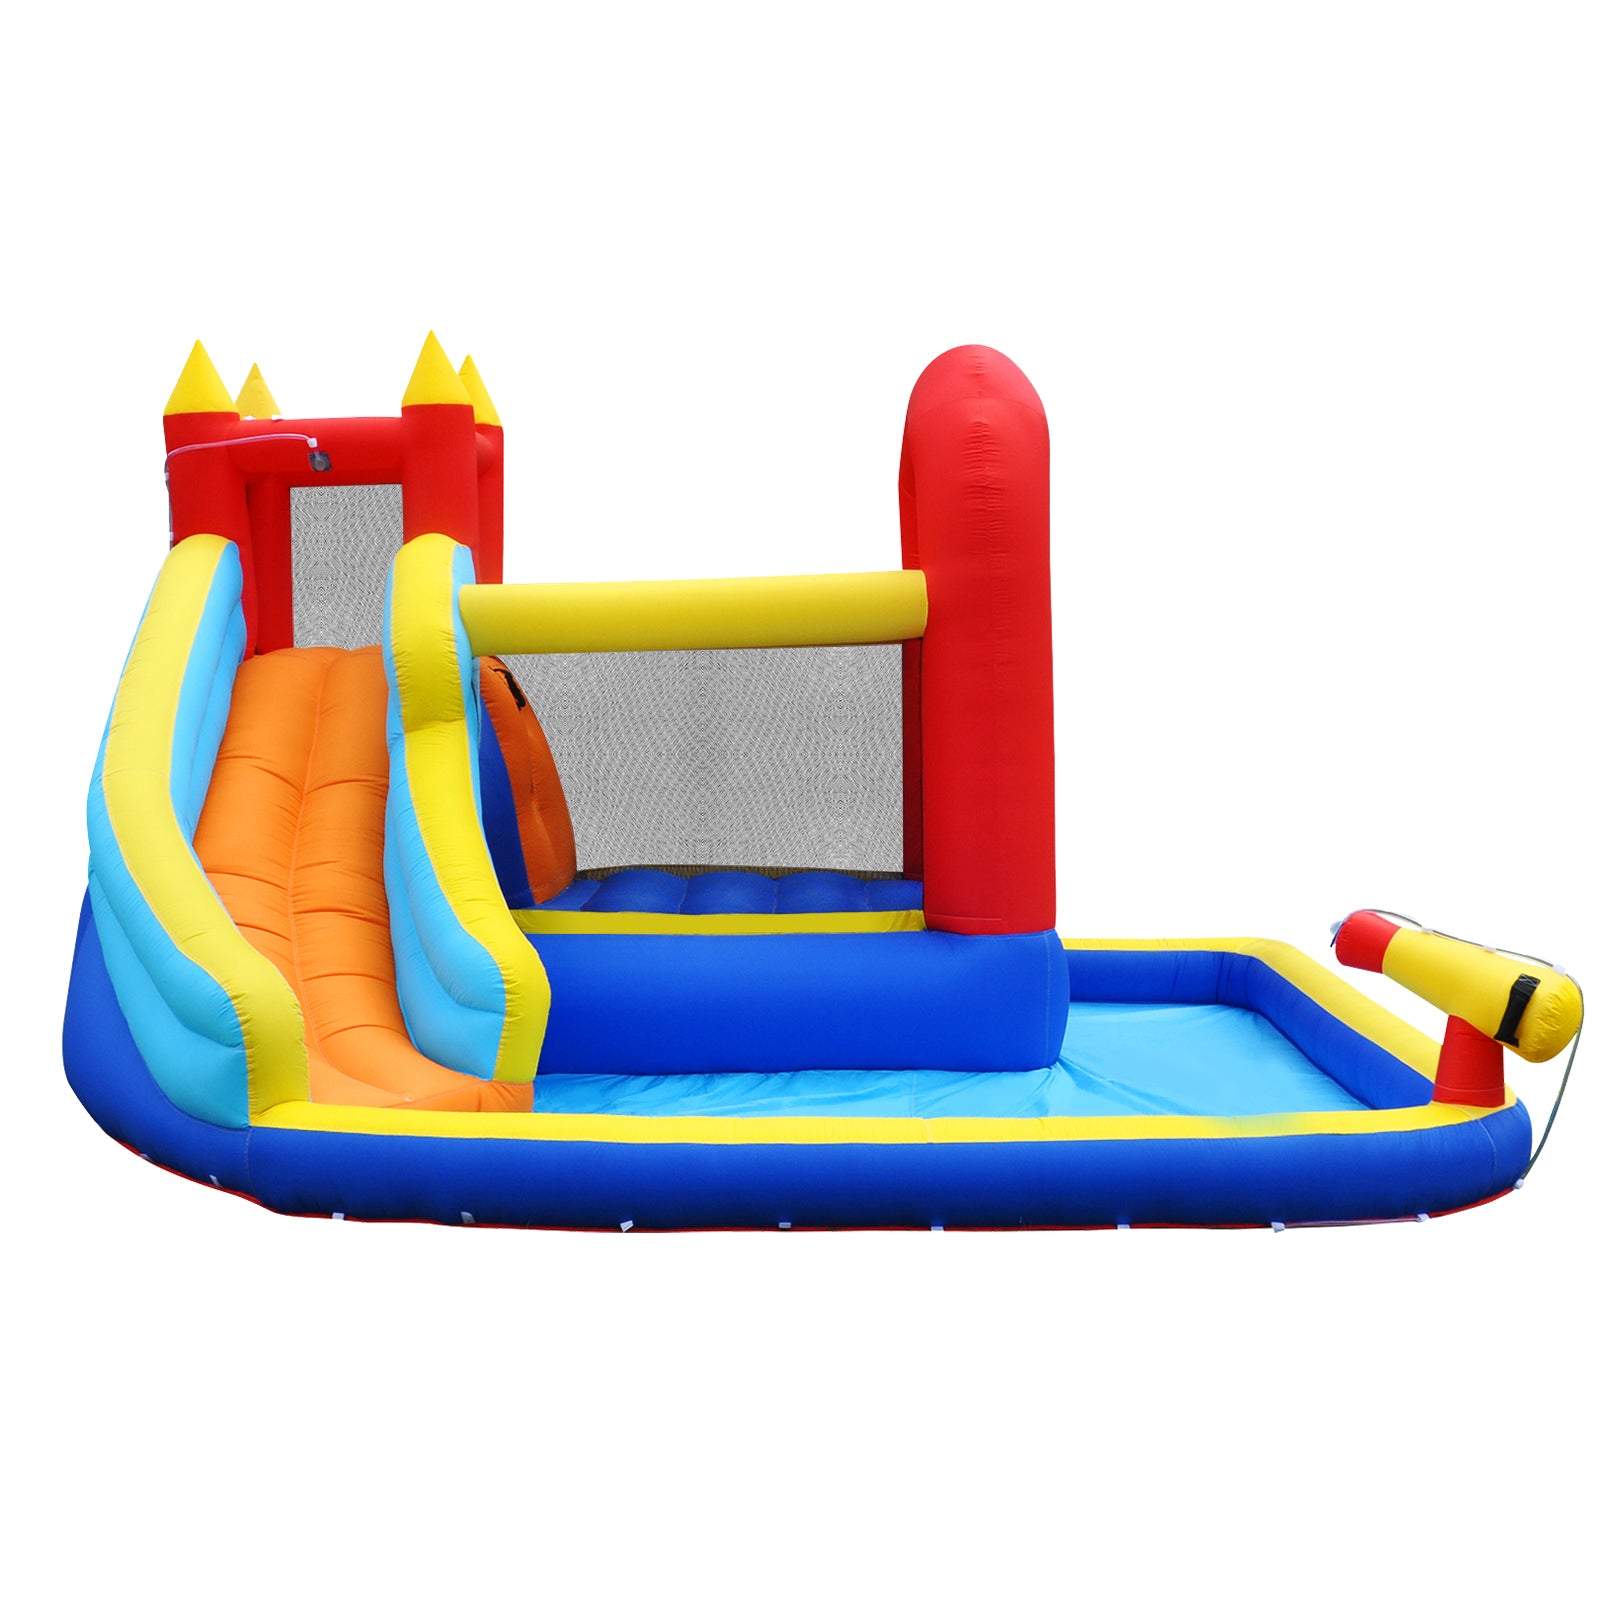 #1106 Inflatable Water Slide Bounce House,Slide Bouncer Castle Playhouse w/Splash Pool,Jump Area, Climbing Wall,Basketball Hoop,450W Air Blower for Kids Backyard Indoor Outdoor Use,Free Water Gun